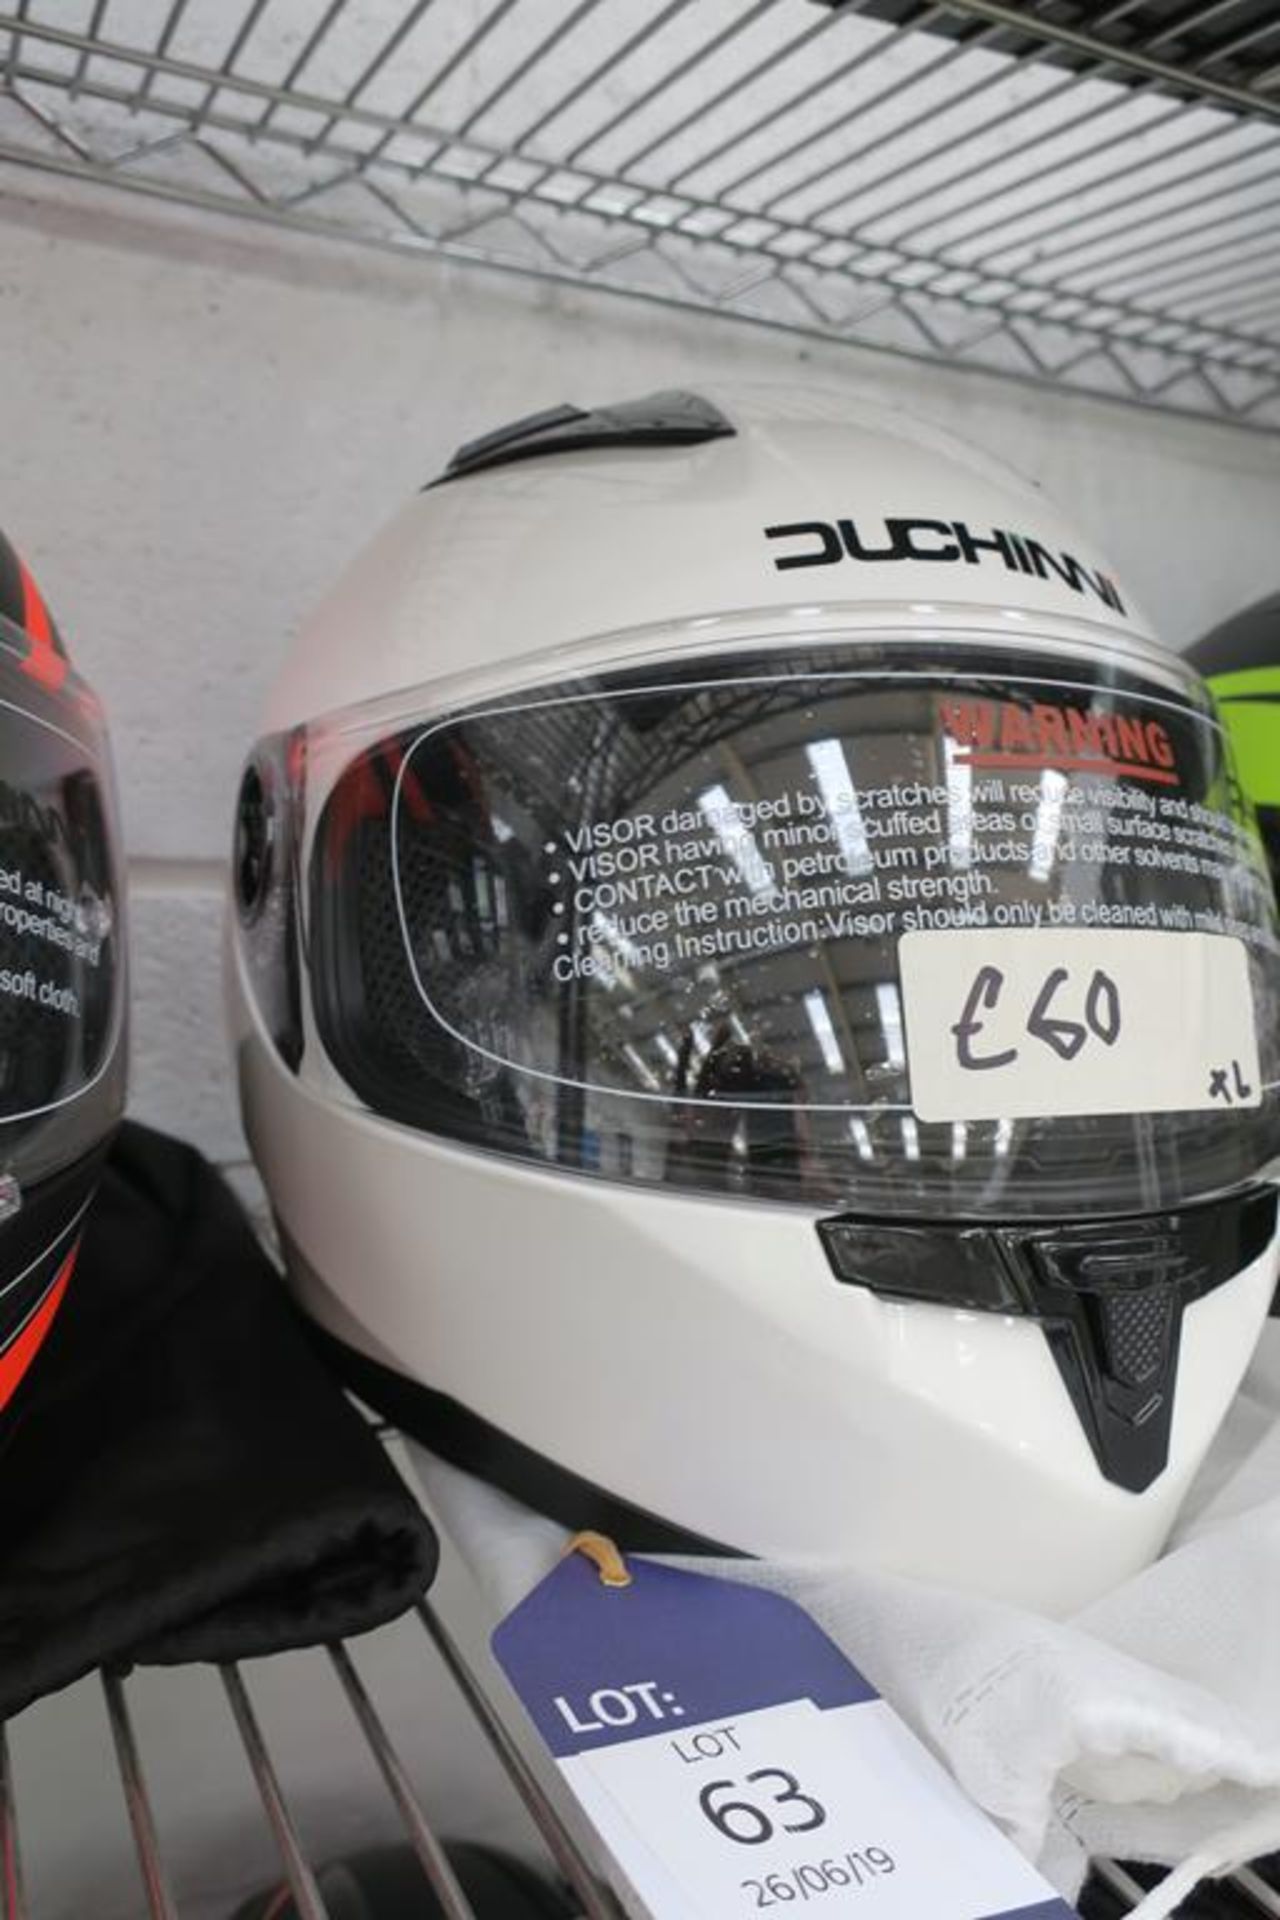 Duchinni YH-FF968 Size XL Helmet comes with HJC Helmet Bag - Image 2 of 3